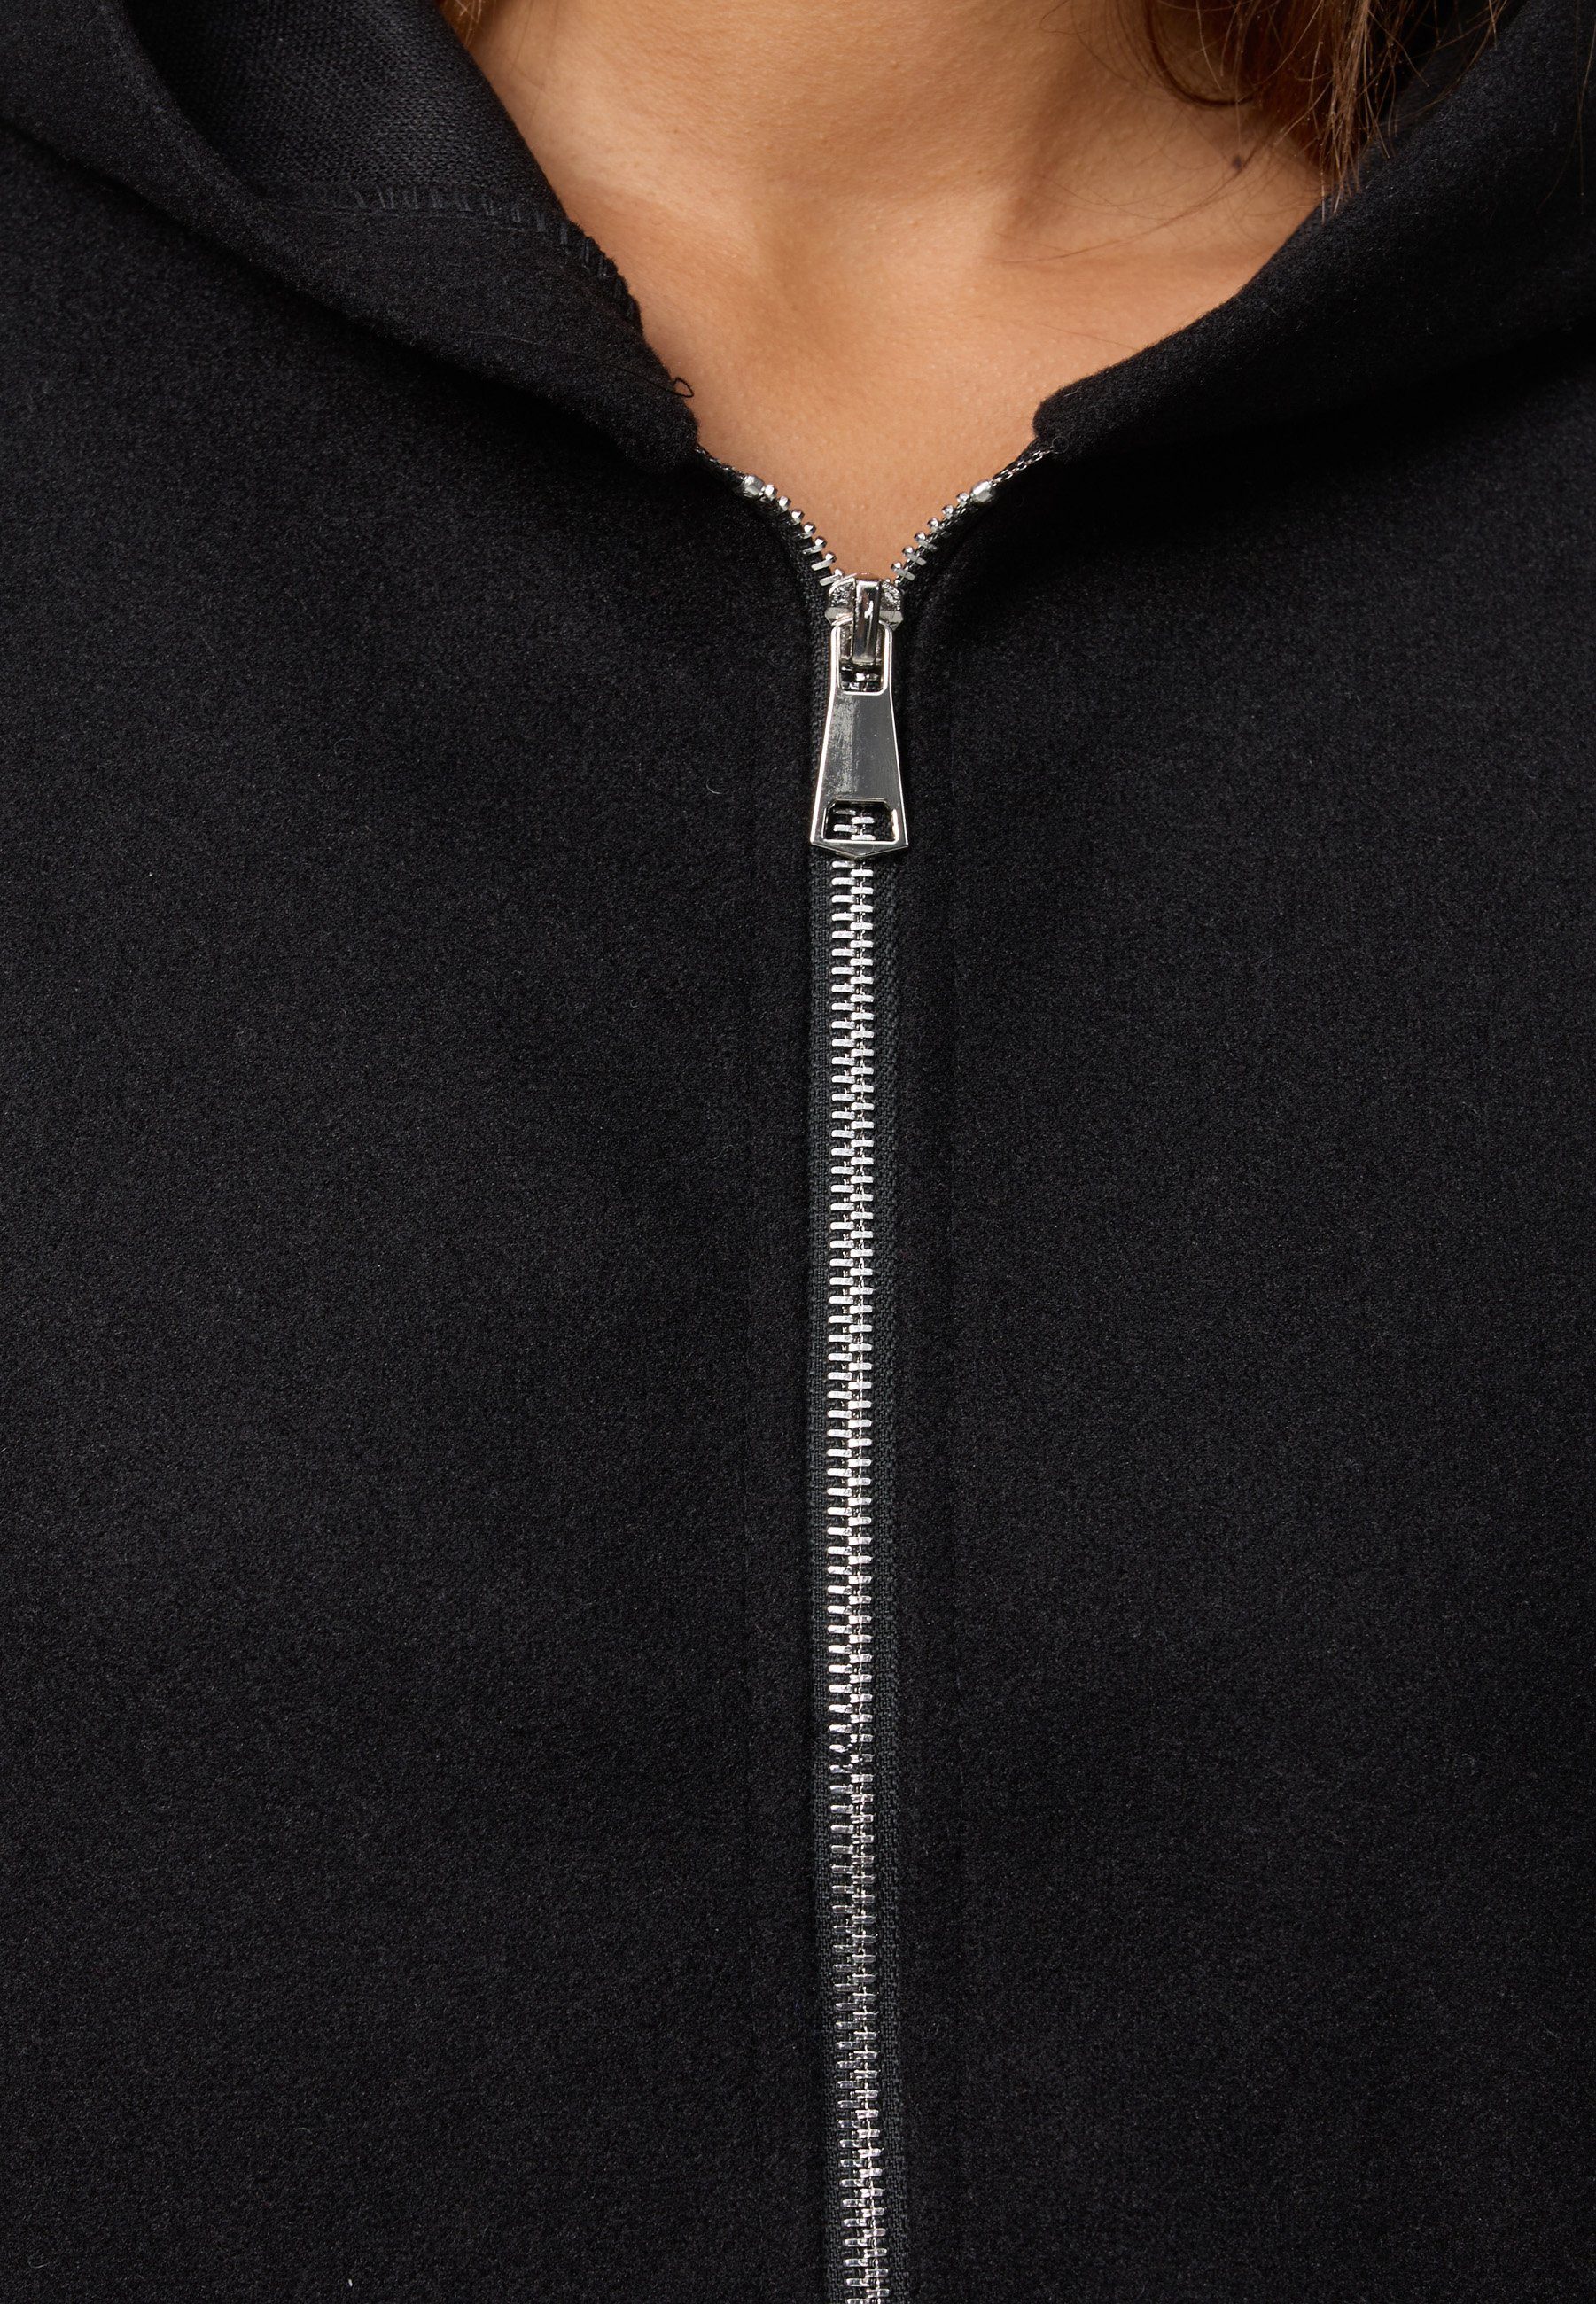 Worldclassca Worldclassca Kapuzensweatjacke Jacke Oversized Schwarz Zipper Kapuzenpullover Sweatshirt Hoodie